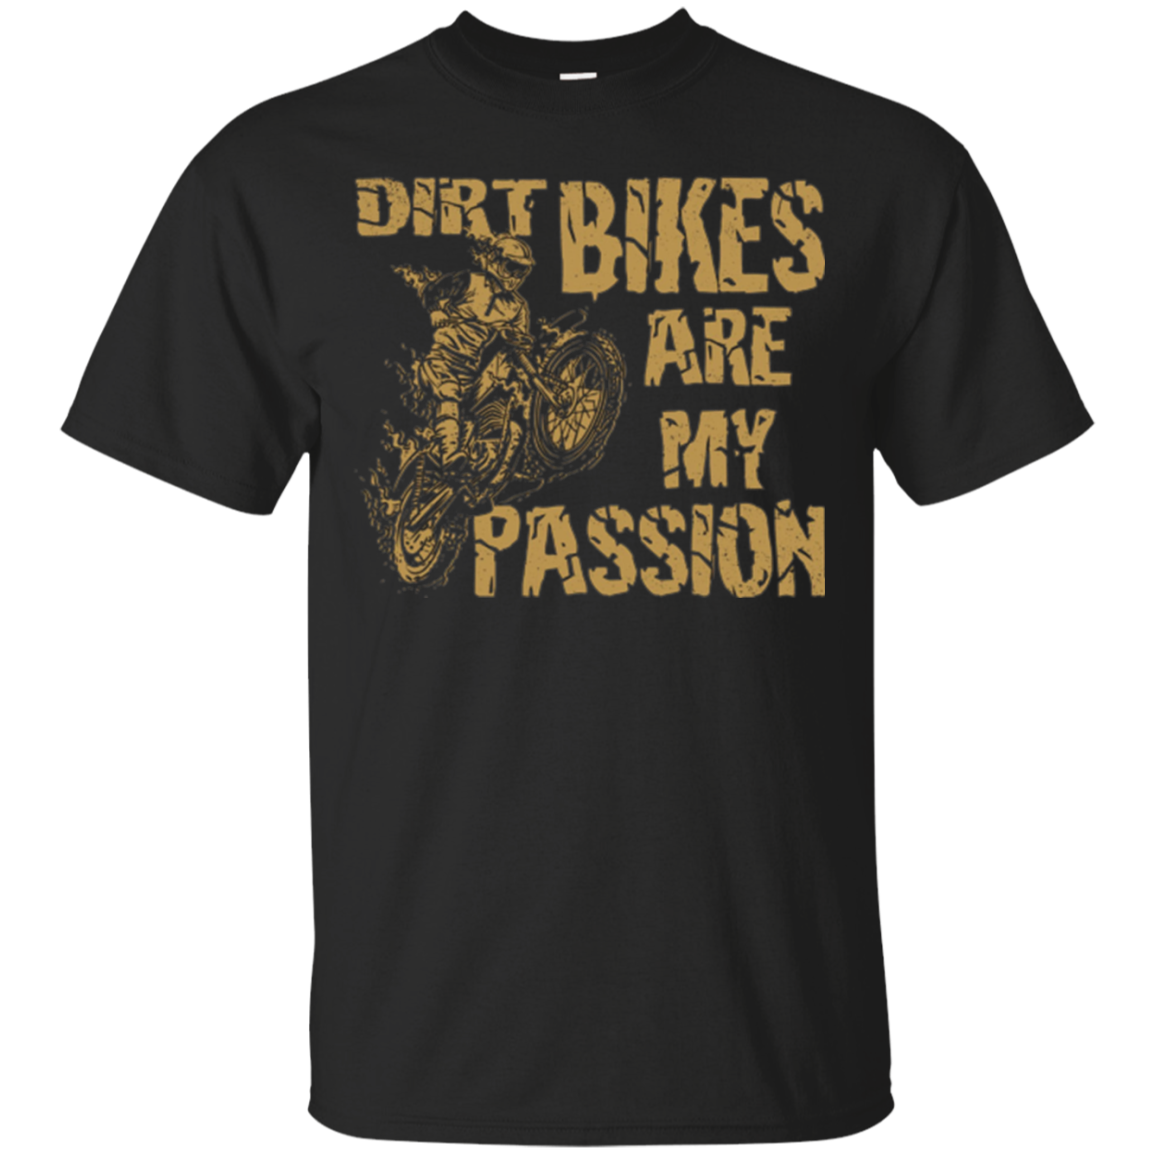 The Motocross Dirt Bikes Off-road Motorcycle Racing T Shirt